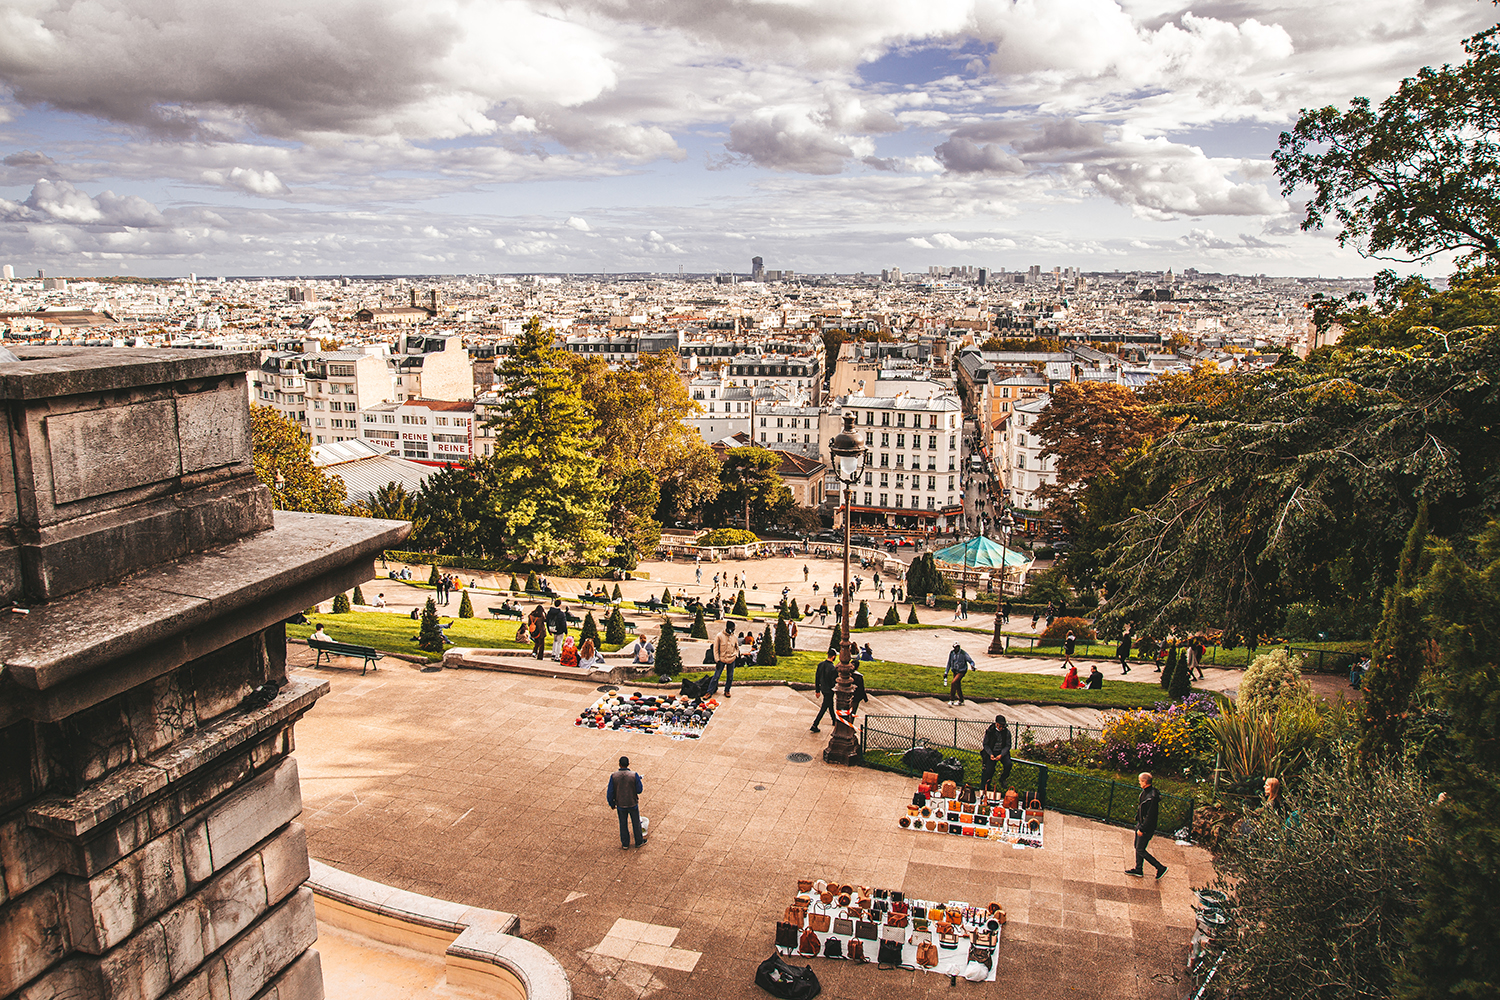 Paris Viewpoint II  
© Marielle Janotta - My Travel Island